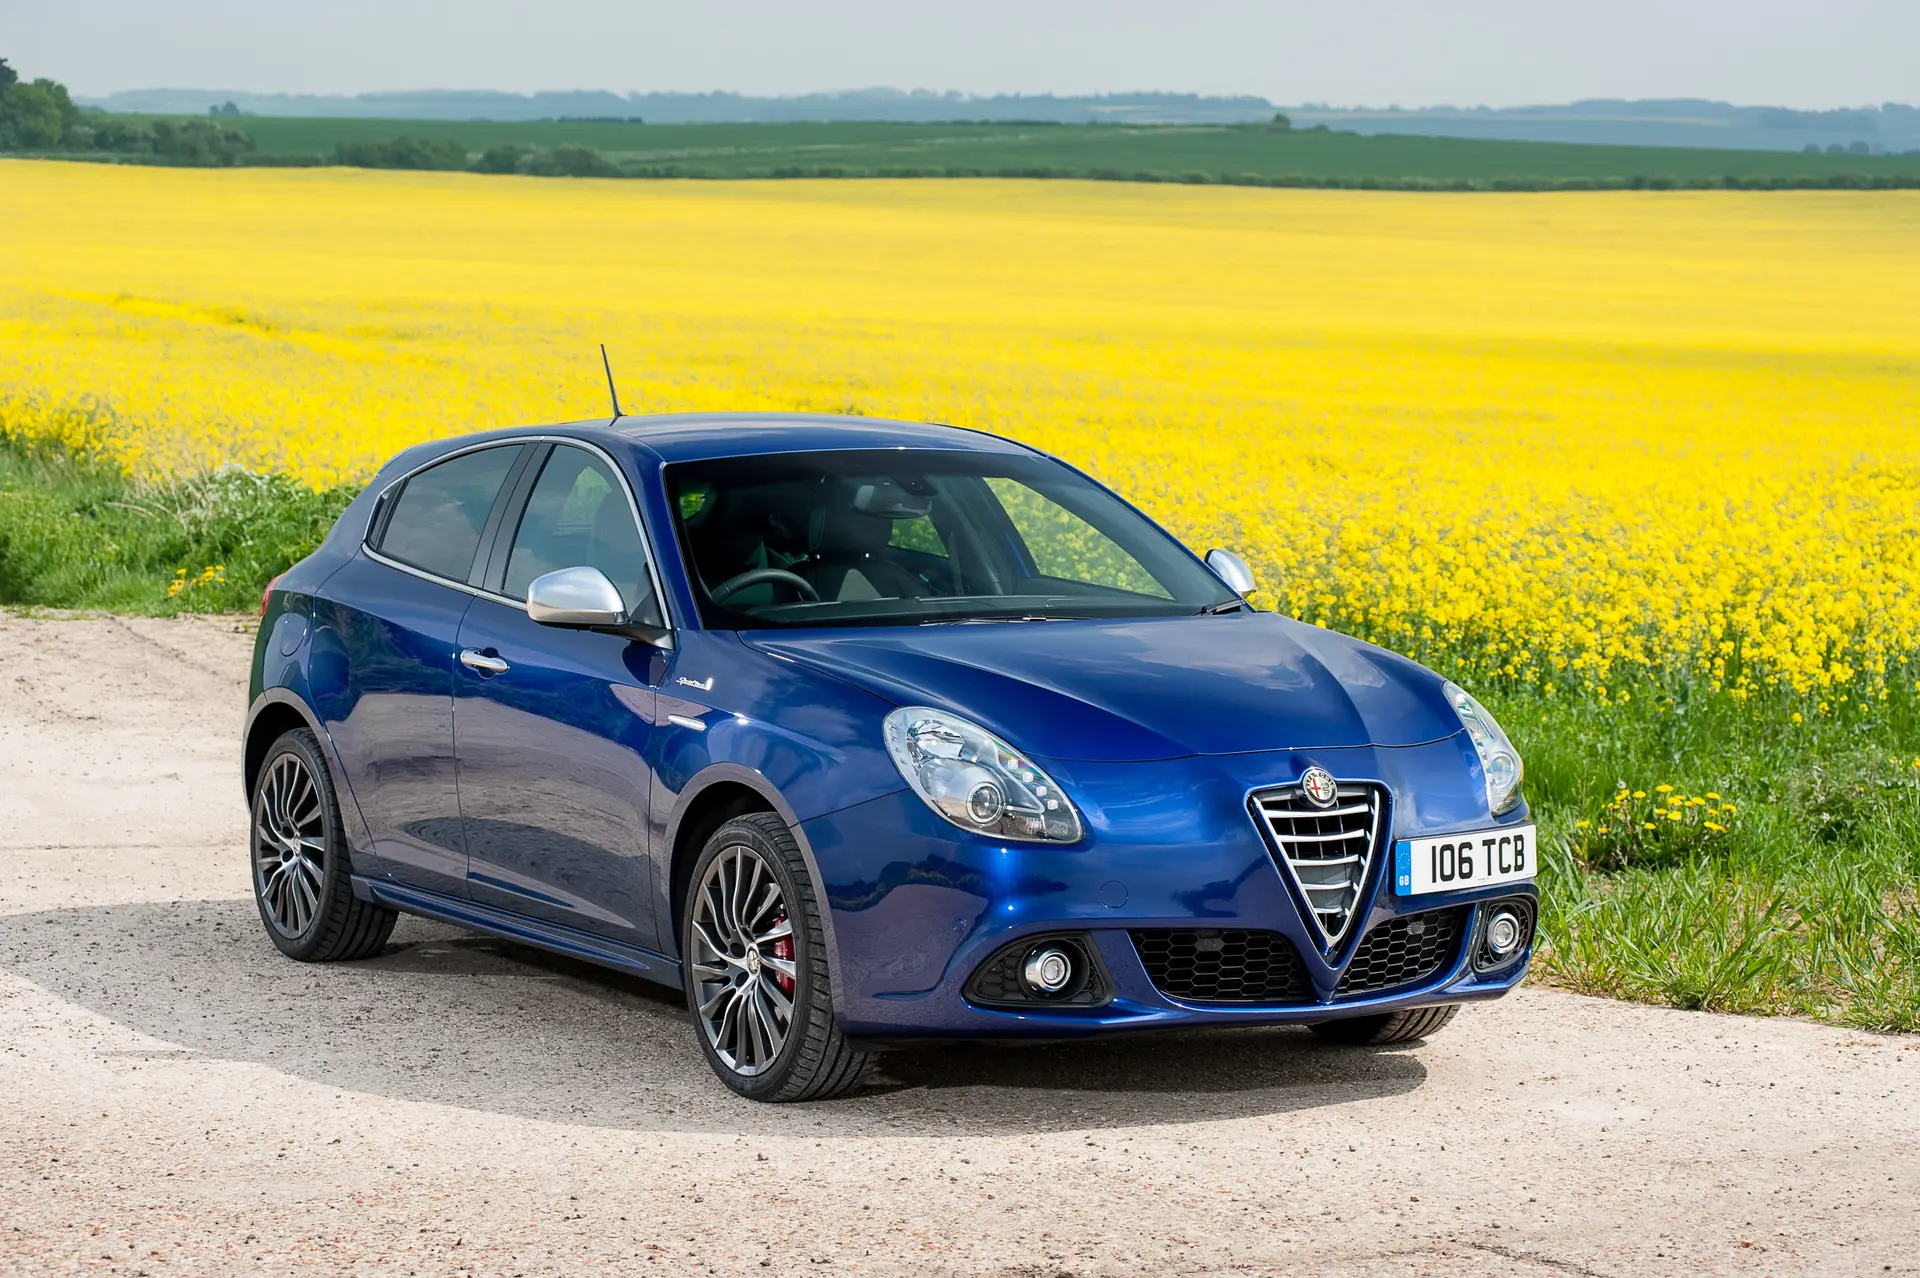 Alfa Romeo Giulietta (2014 - 2020) used car review, Car review